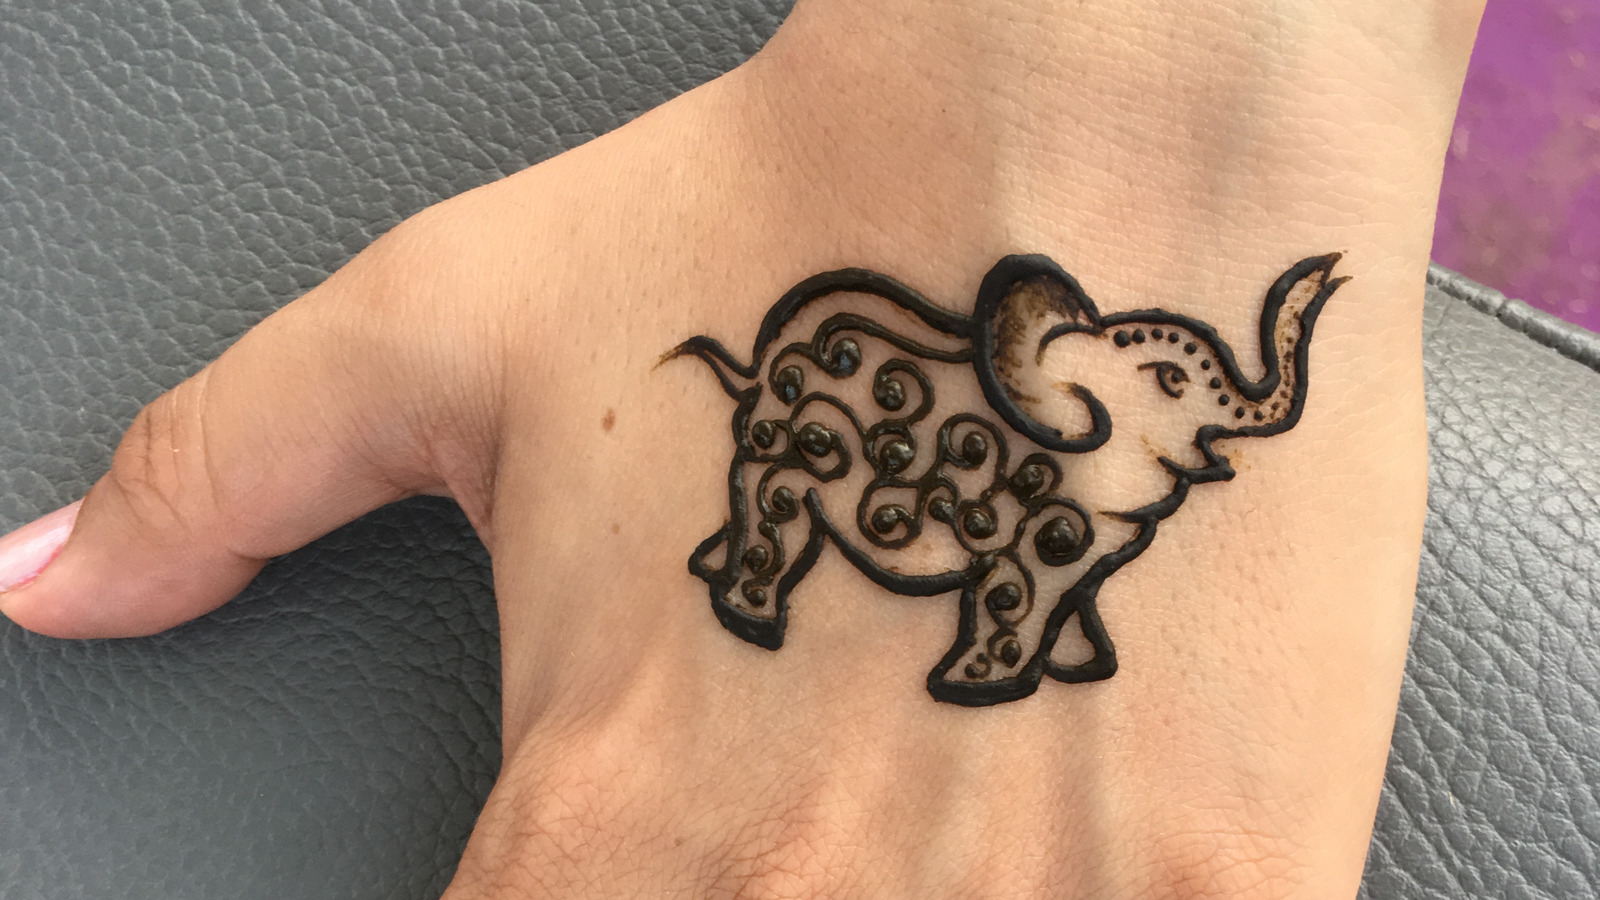 Stunning Small Elephant Tattoos  Small Elephant Tattoos  Small Tattoos   MomCanvas